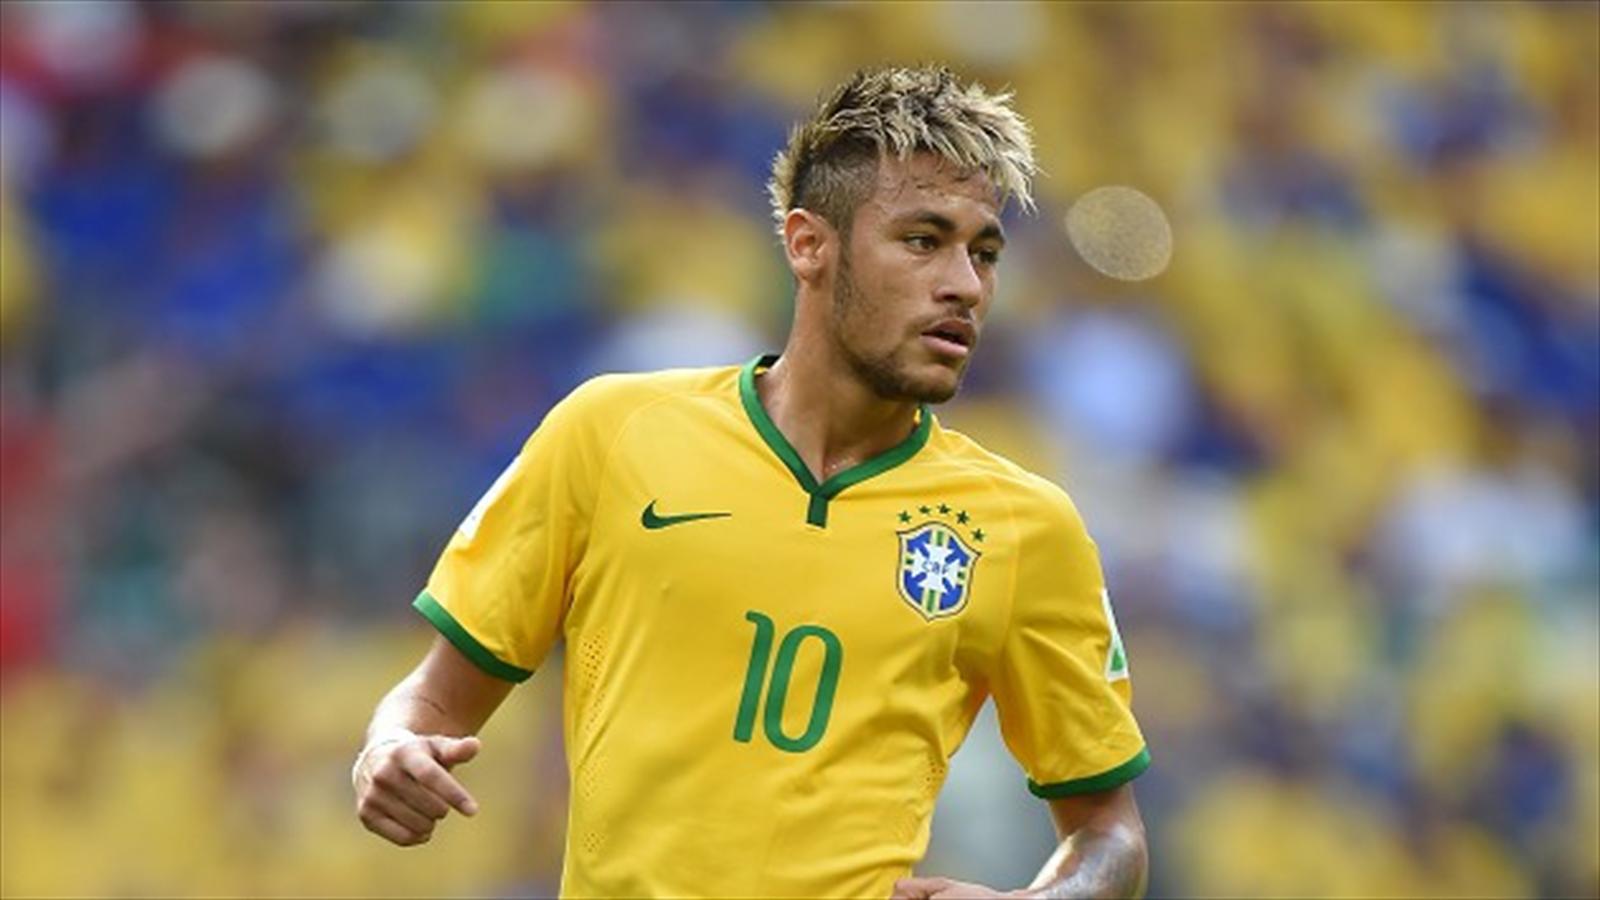 Neymar Brazil HD Wallpaper 10. Neymar Brazil HD Wallpaper